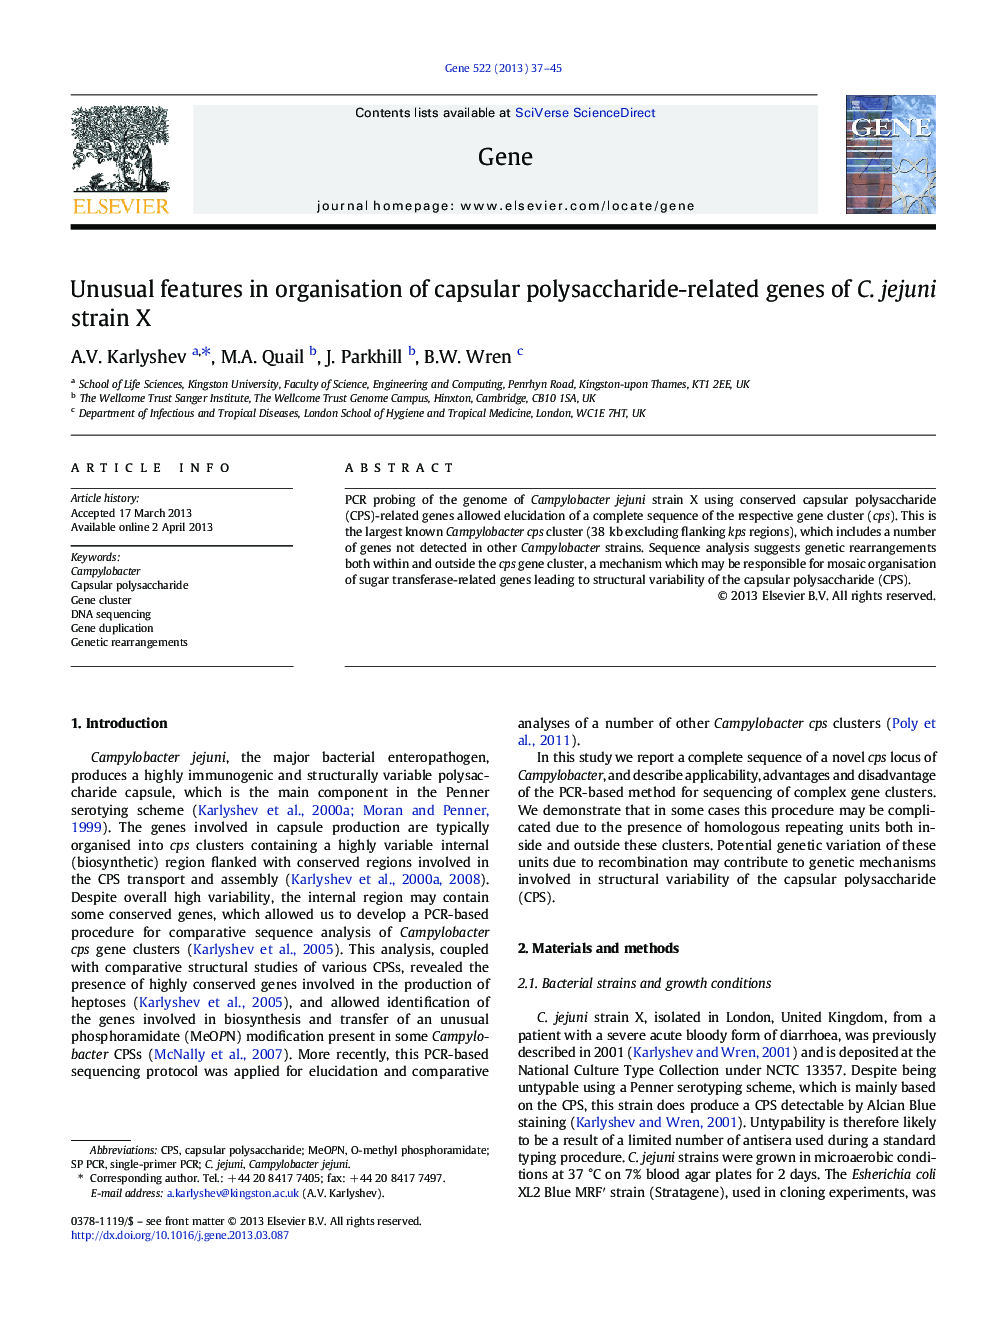 Unusual features in organisation of capsular polysaccharide-related genes of C. jejuni strain X